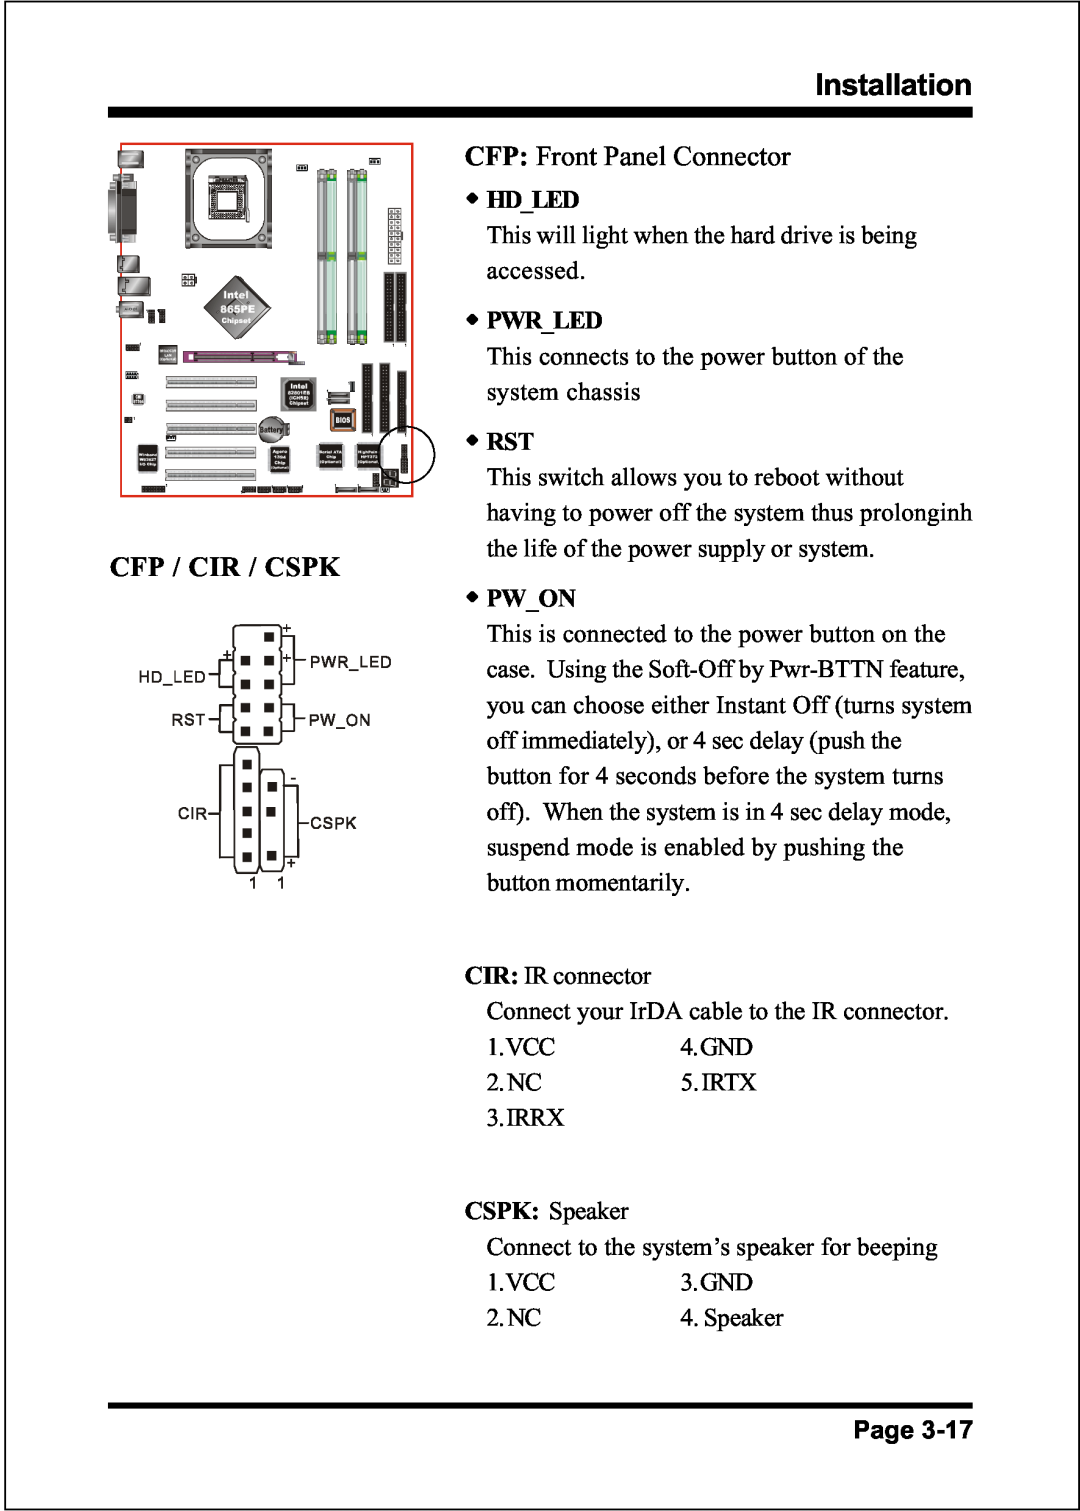 Intel FSB800 / DDR400 (PC3200), FSB800 (PC2700), FSB800 (PC3200) CFP: Front Panel Connector, Cfp / Cir / Cspk, Installation 